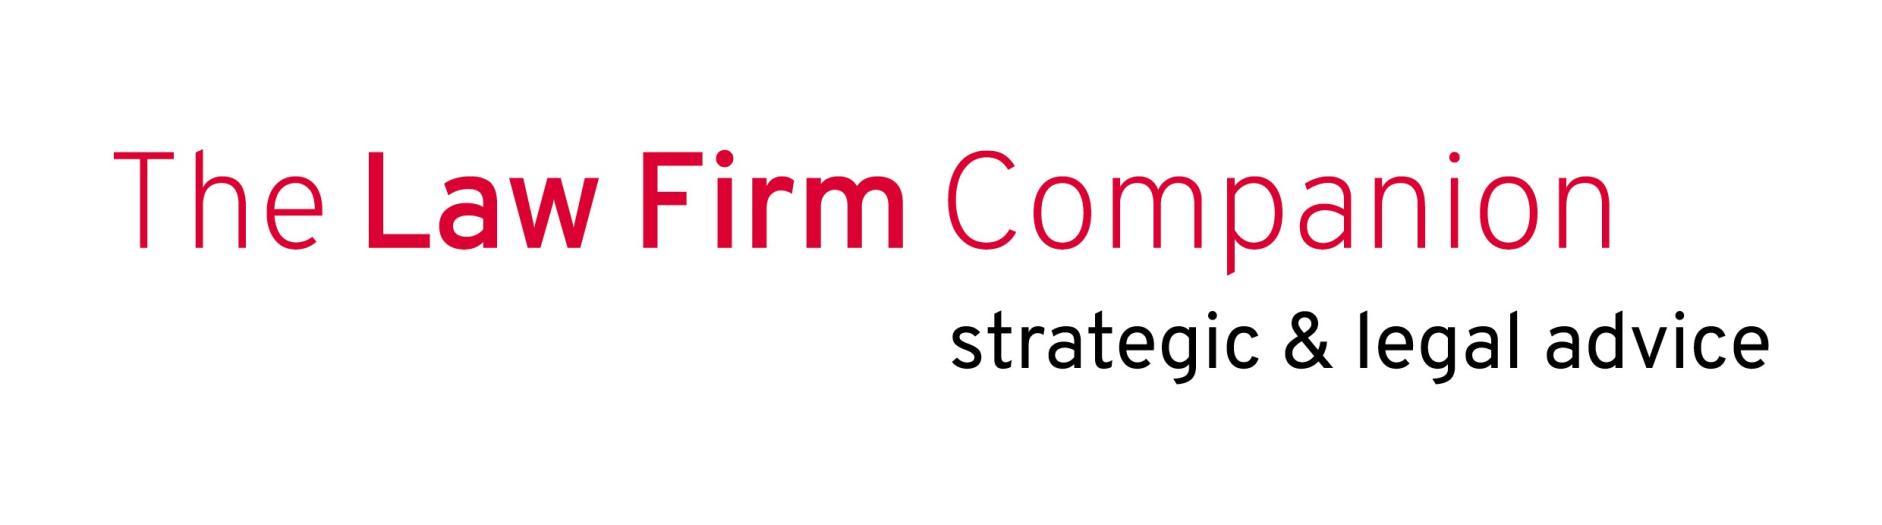 LawFirmCompanion_Logo